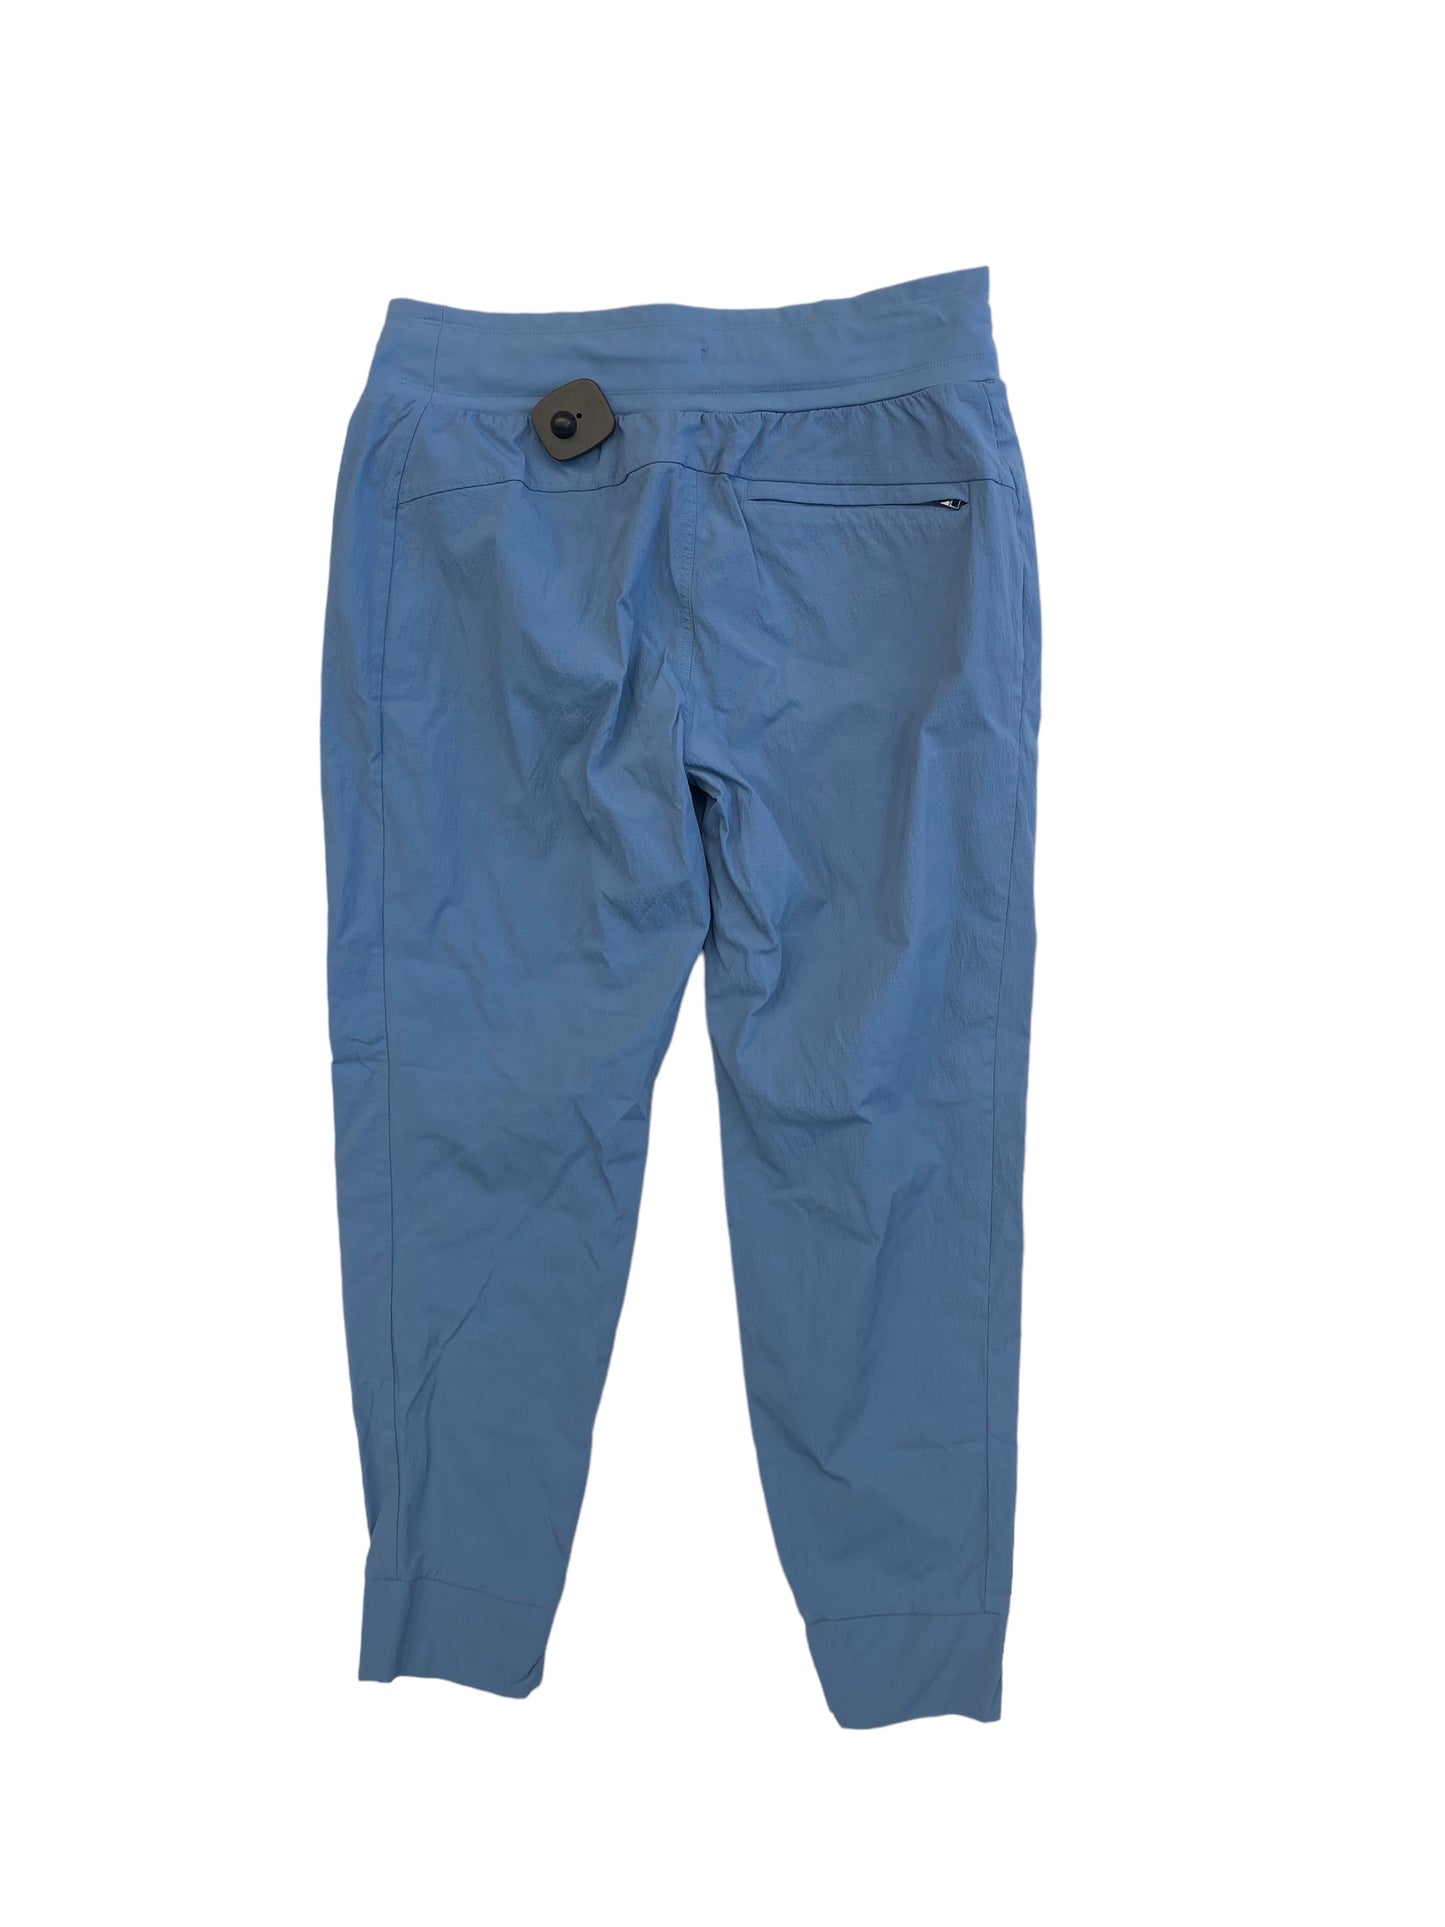 Blue Athletic Pants Athleta, Size 8